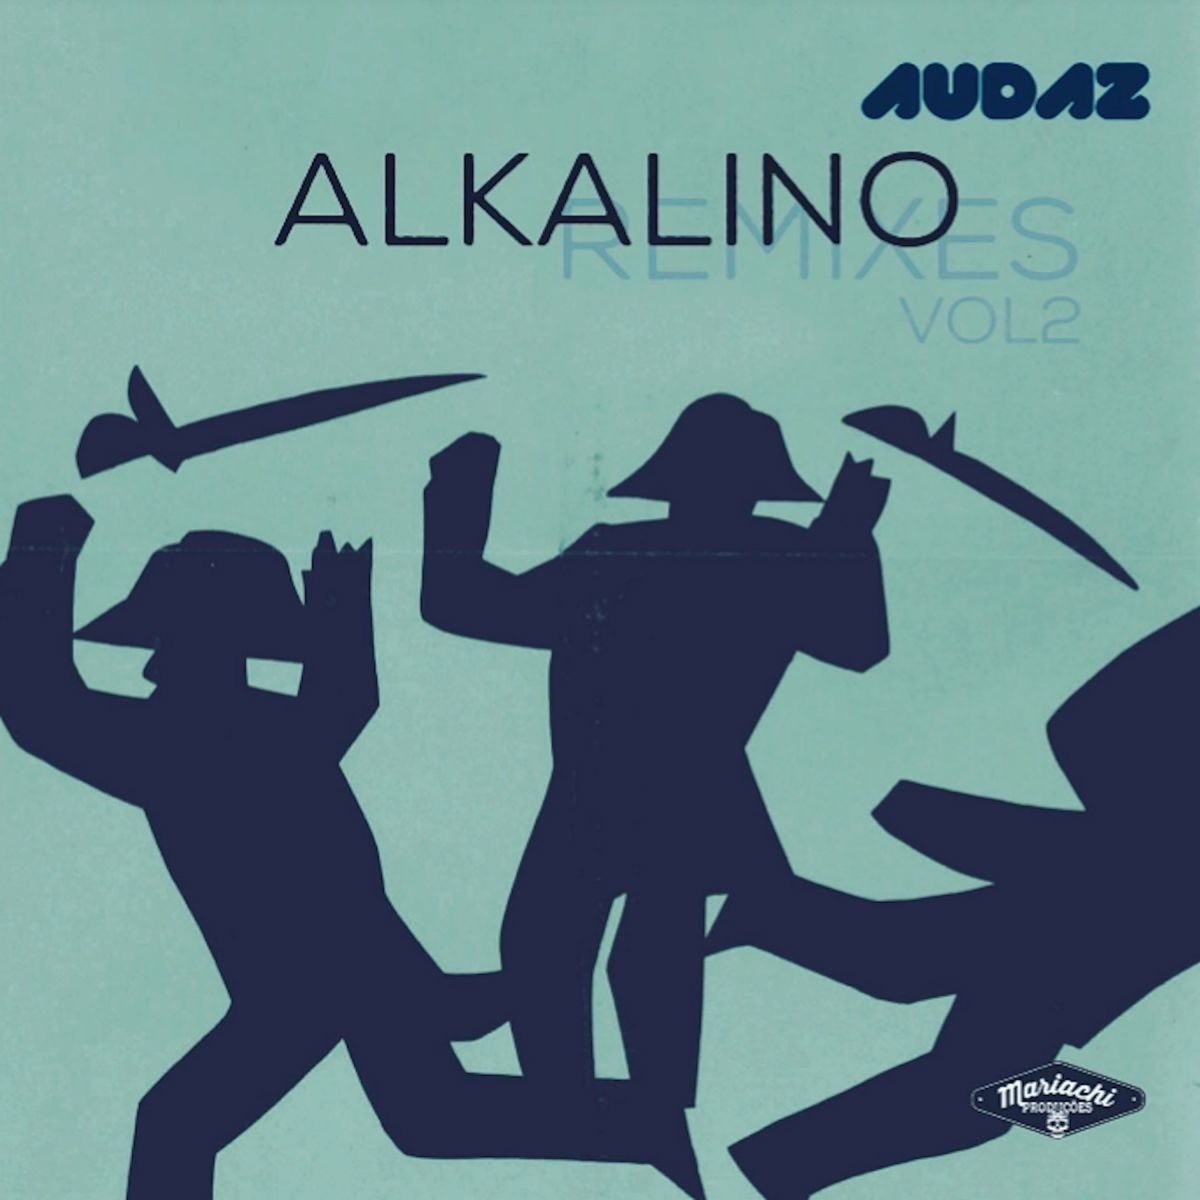 Alkalino - Remixes, Vol. 2 (2008 - 2018) / Audaz